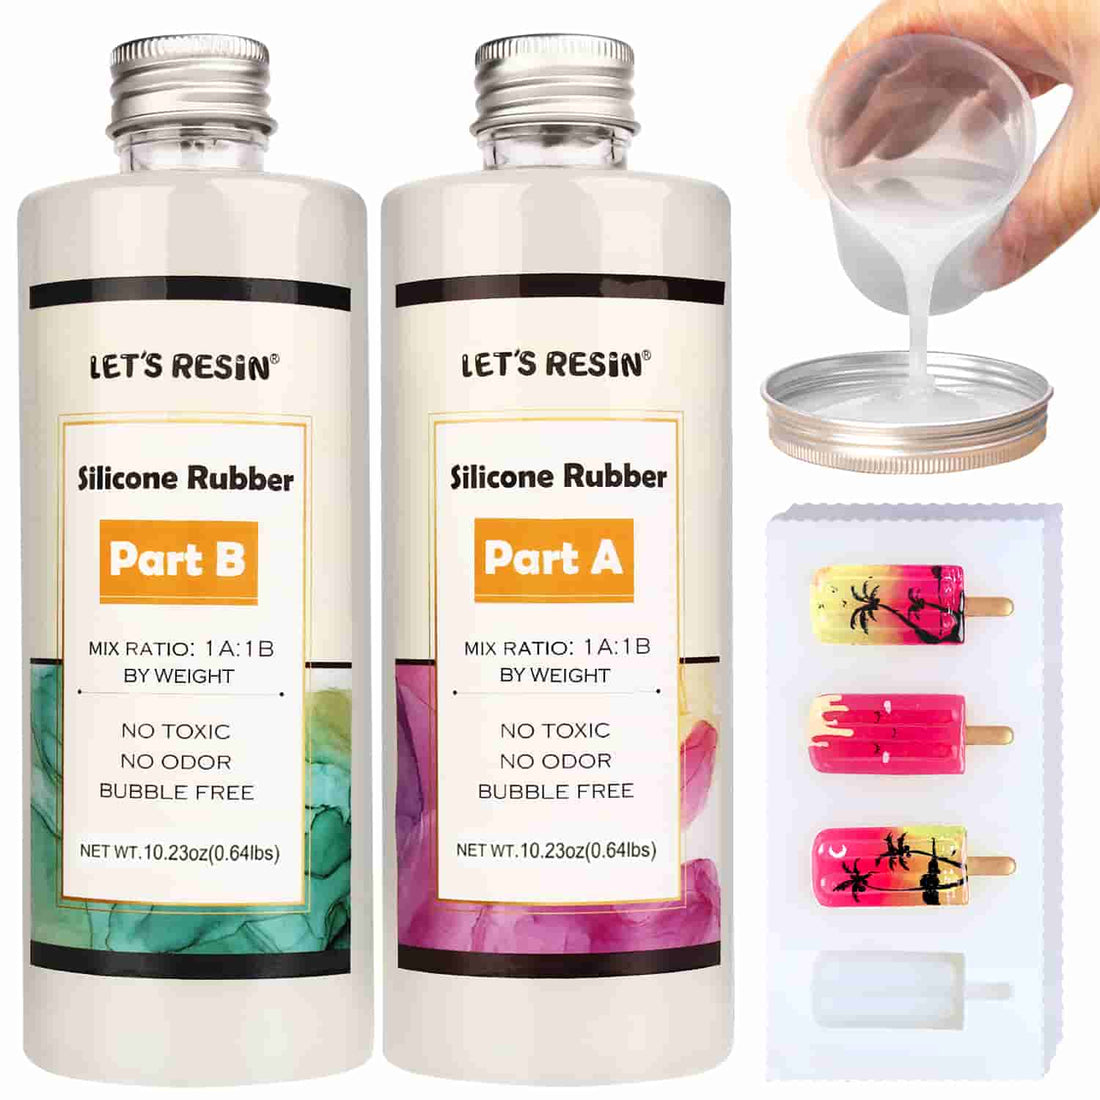 24 oz Hand-Painted Epoxy Resin Kit